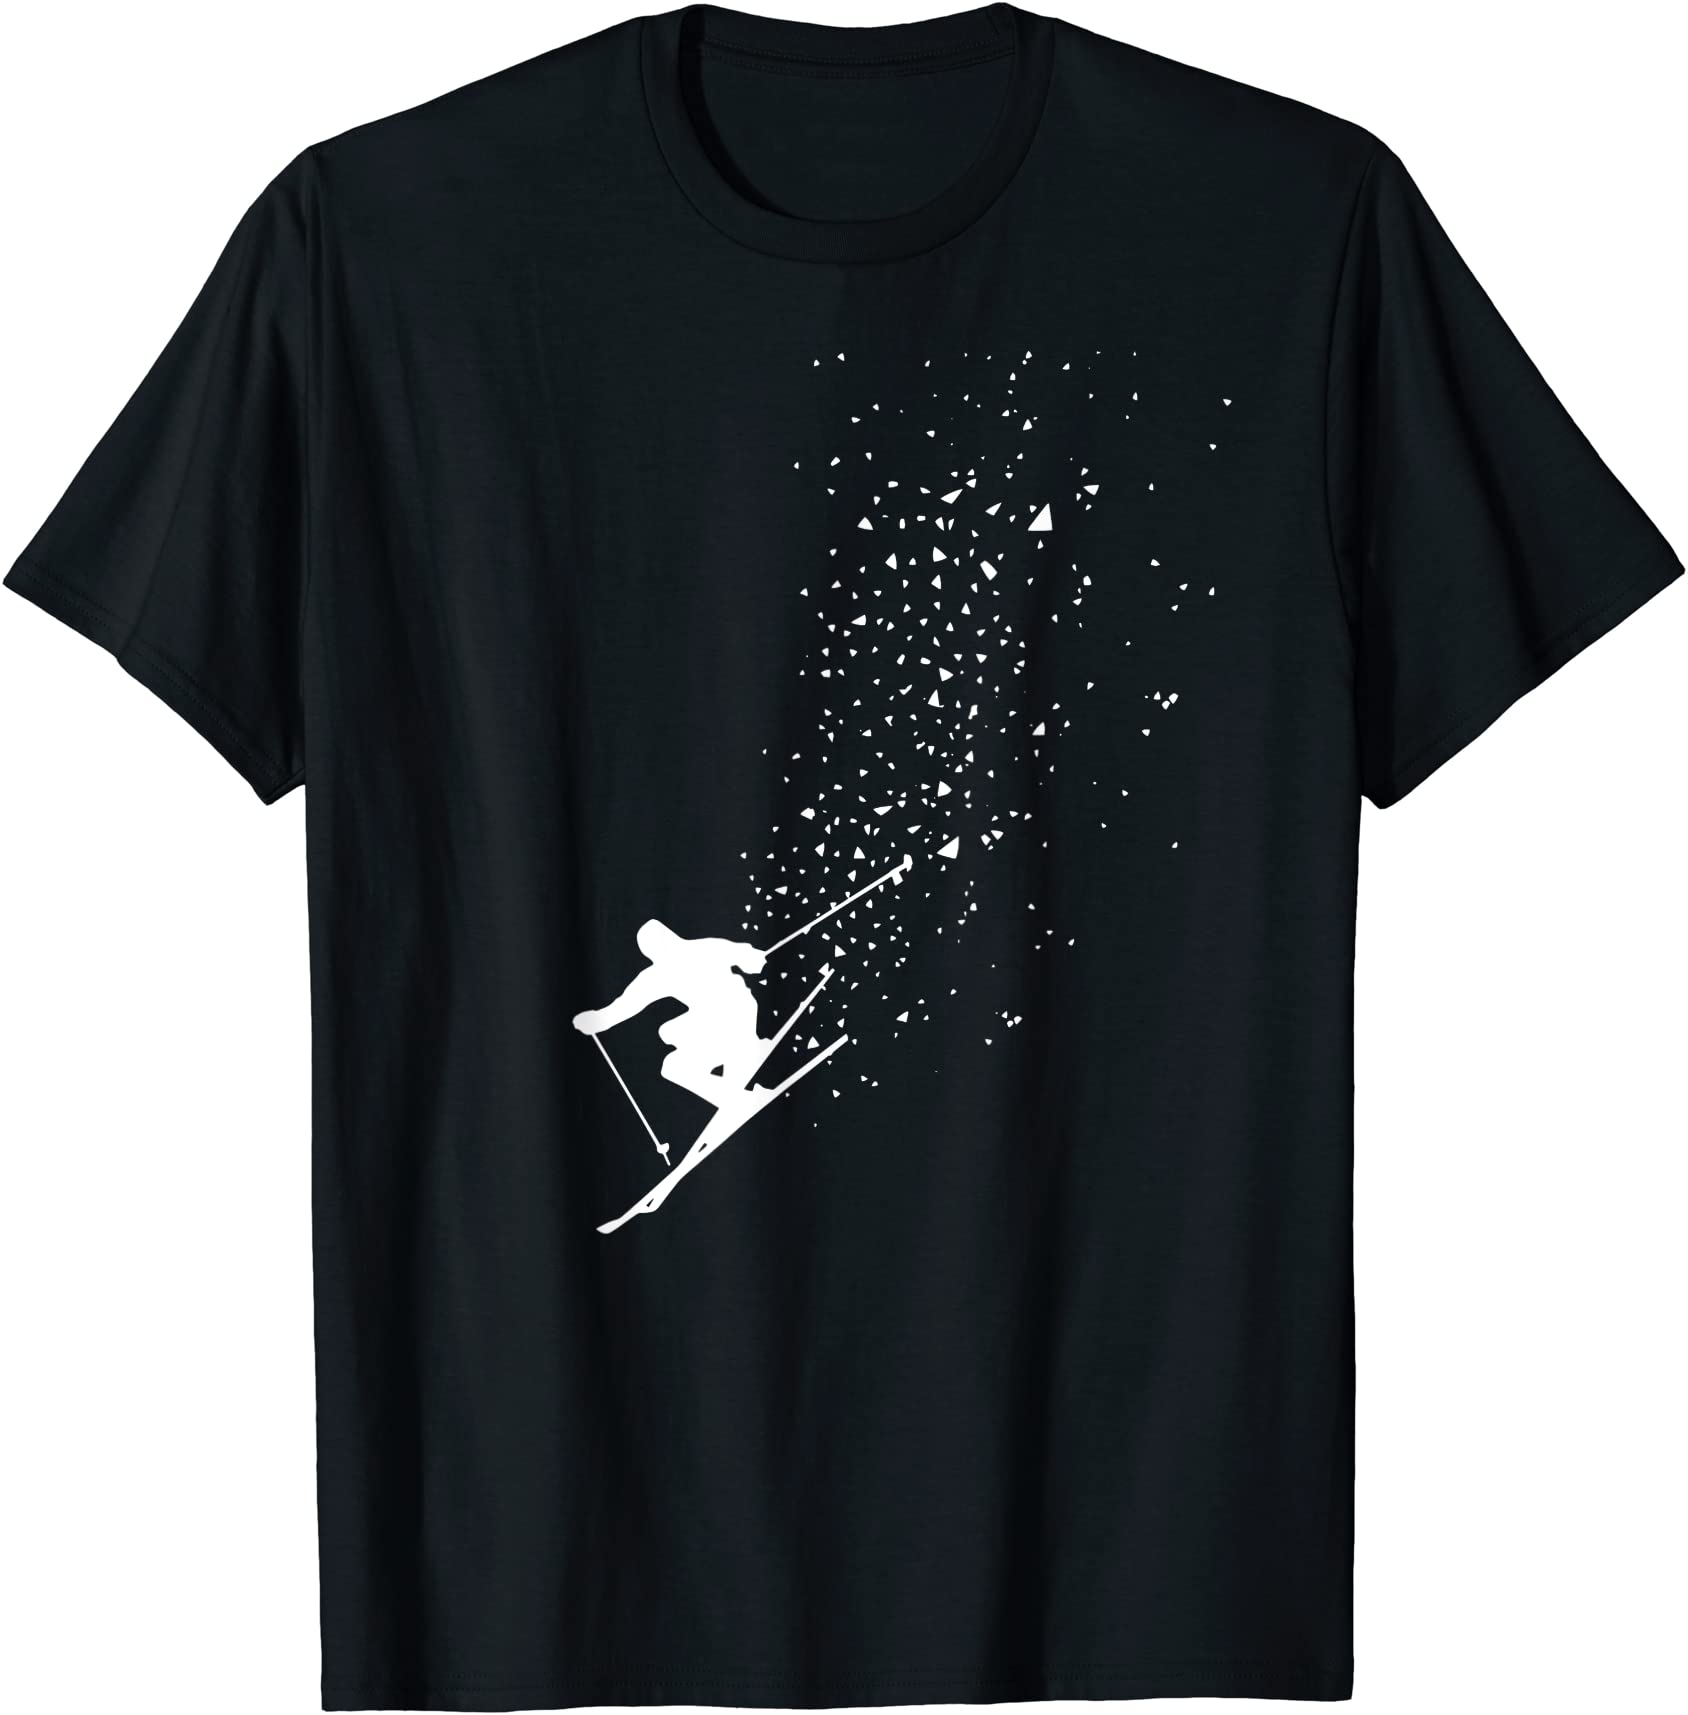 ski freestyle skiing freeski winter sports skier gift t shirt men - Buy ...